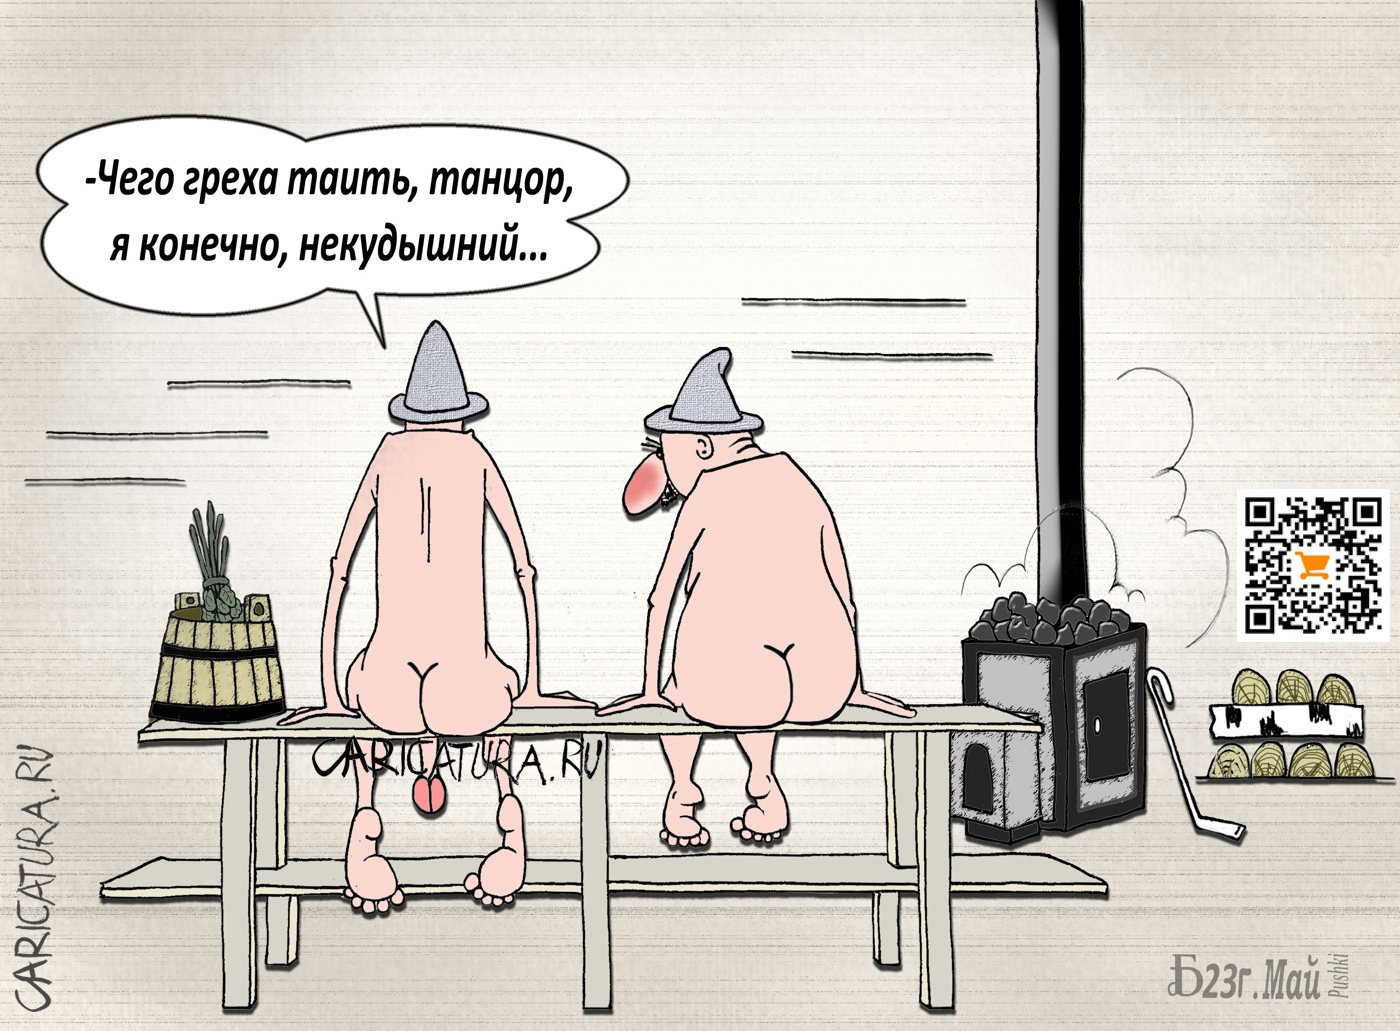 Карикатура "ПроНикудышнего танцора", Борис Демин